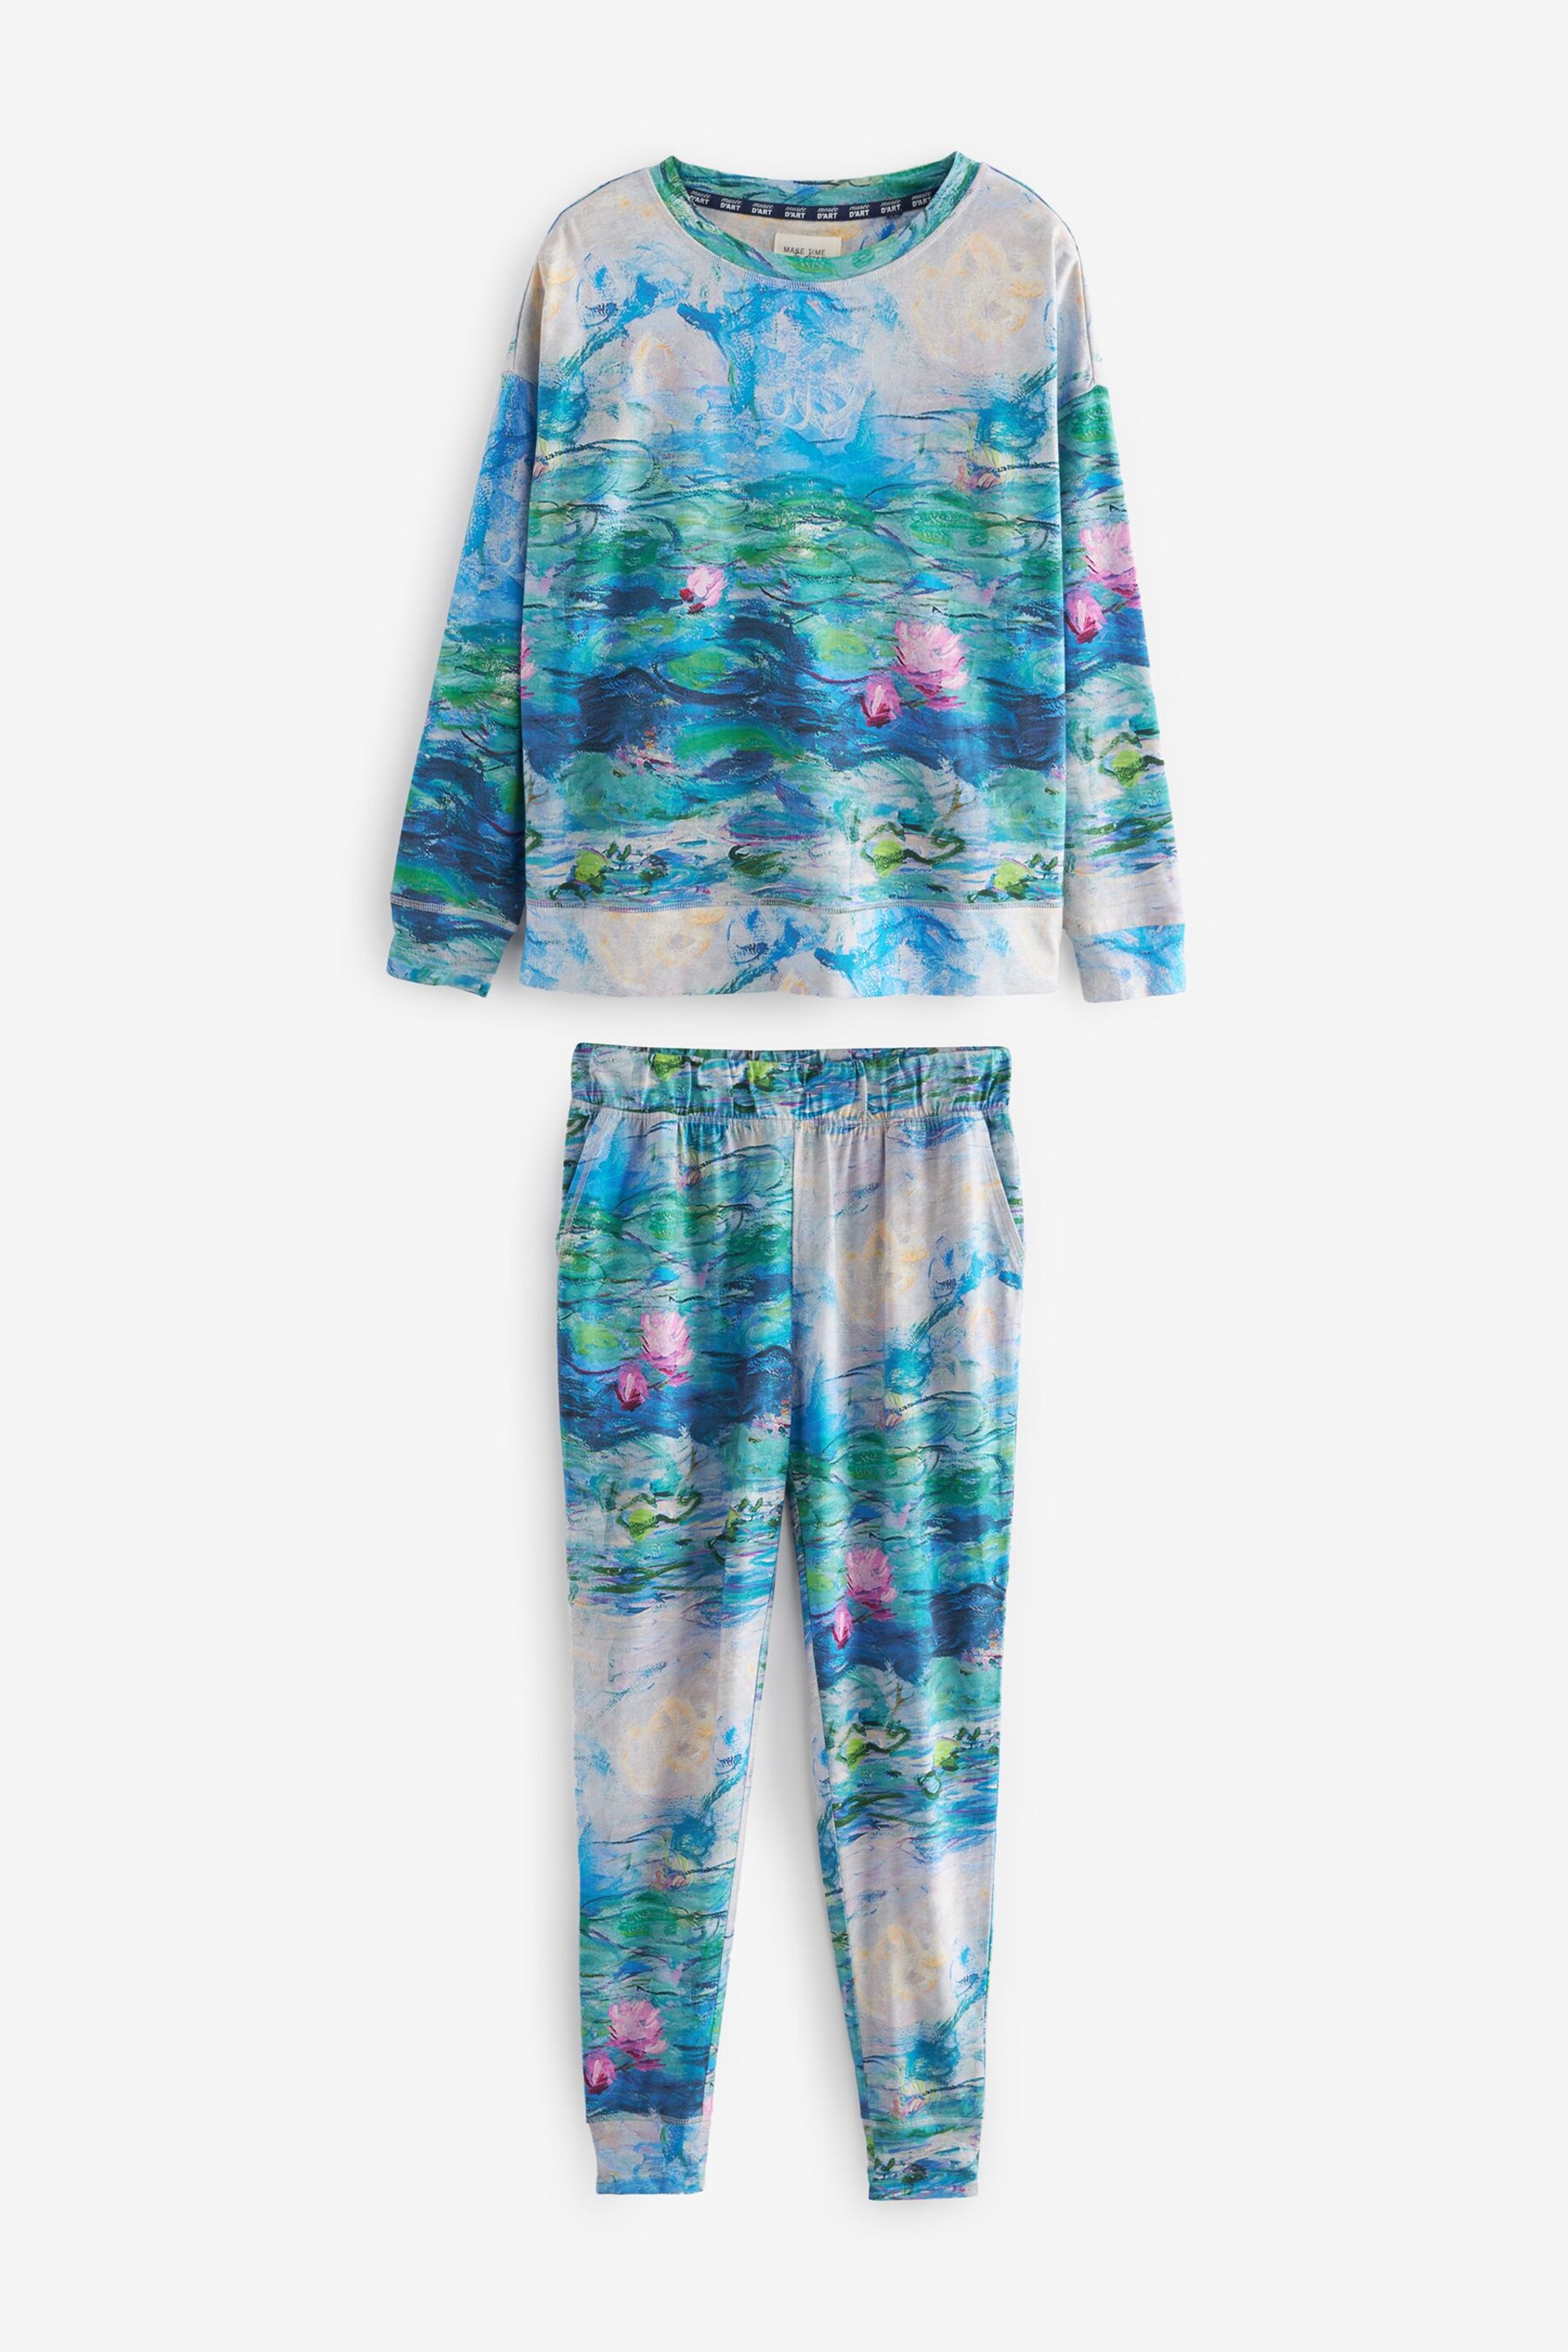 Blue Monet Cotton Long Sleeve Pyjamas - Image 5 of 9